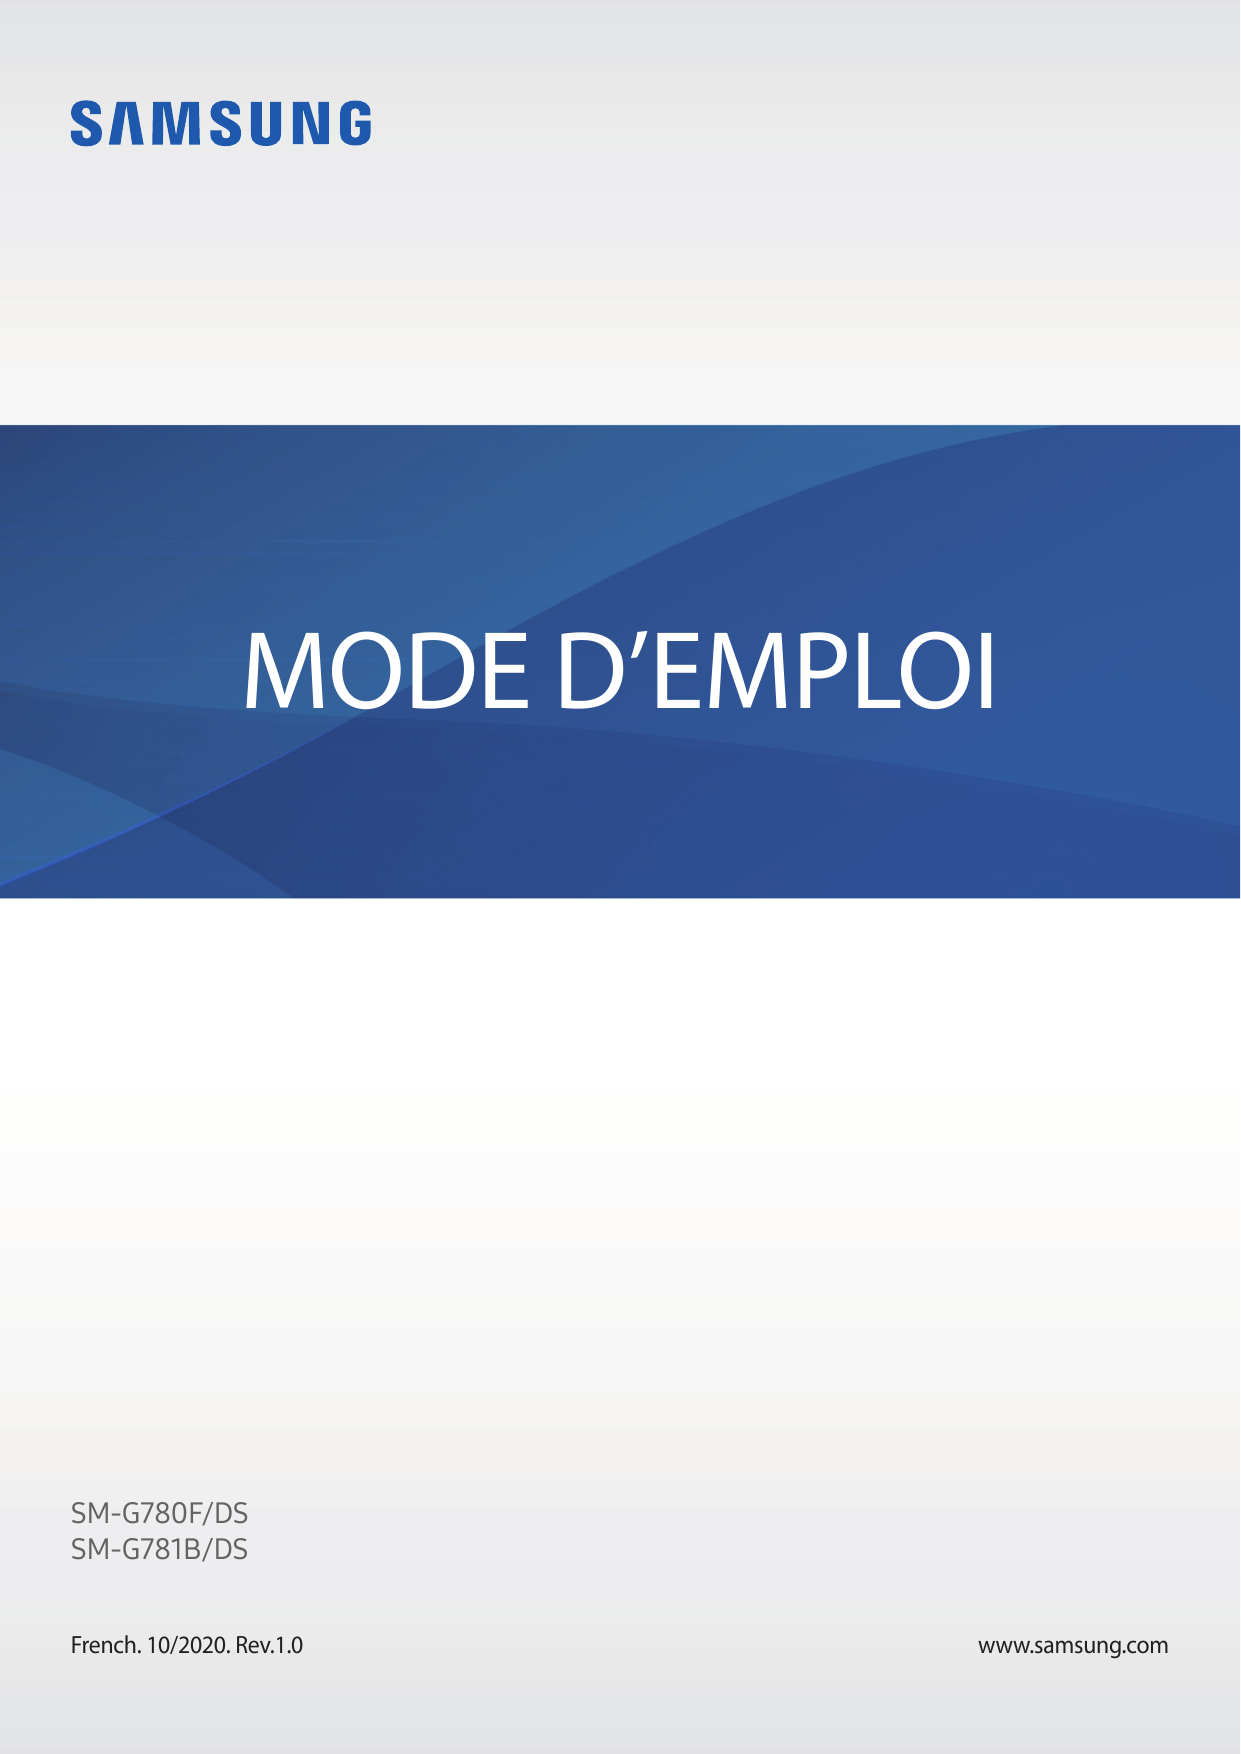 MODE D’EMPLOISM-G780F/DSSM-G781B/DSFrench. 10/2020. Rev.1.0www.samsung.com